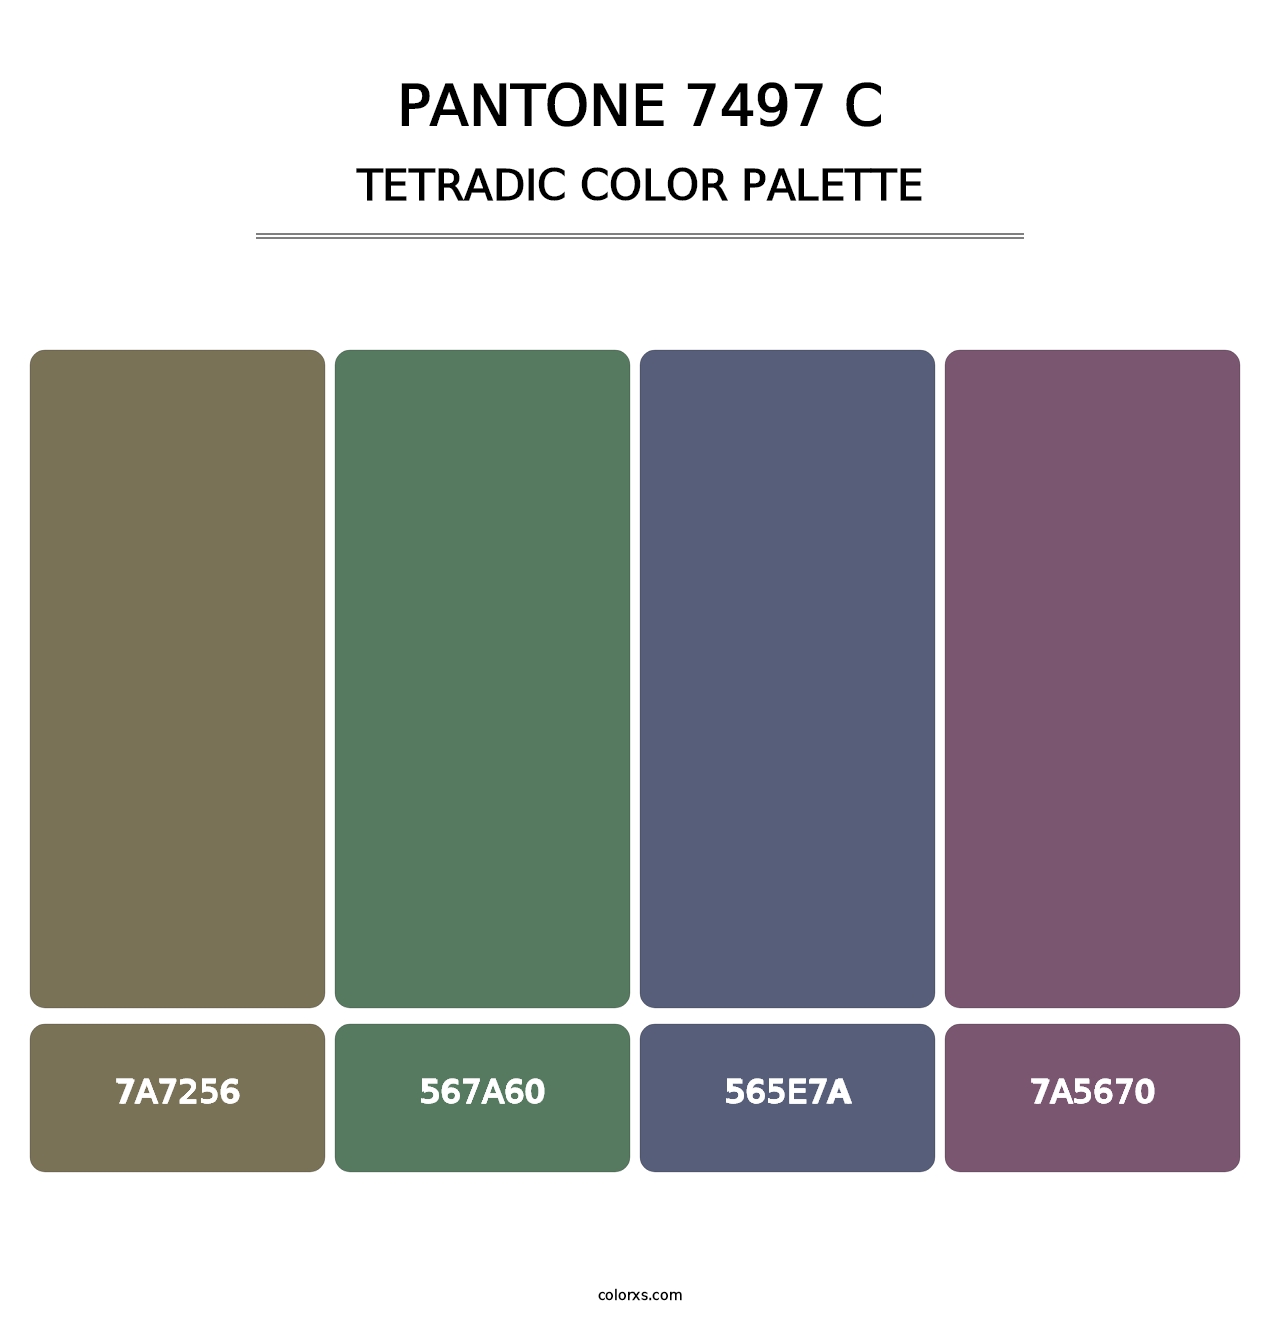 PANTONE 7497 C - Tetradic Color Palette